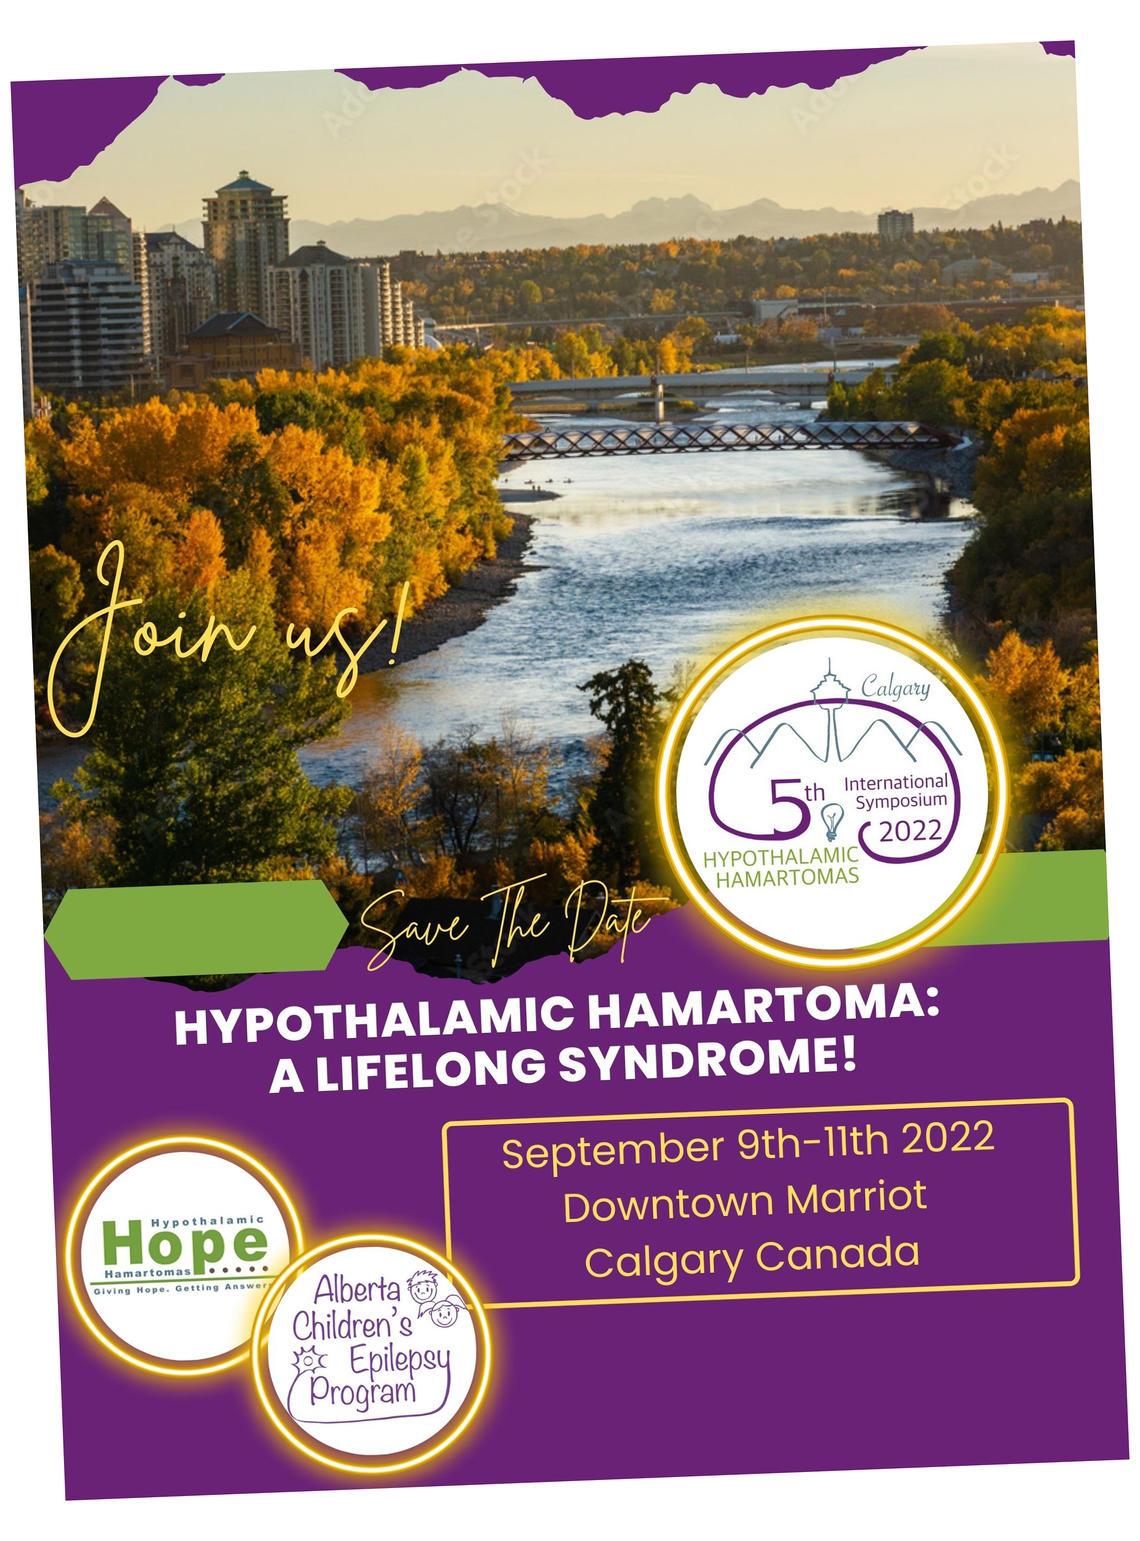 : Hypothalamic Harmatoma poster